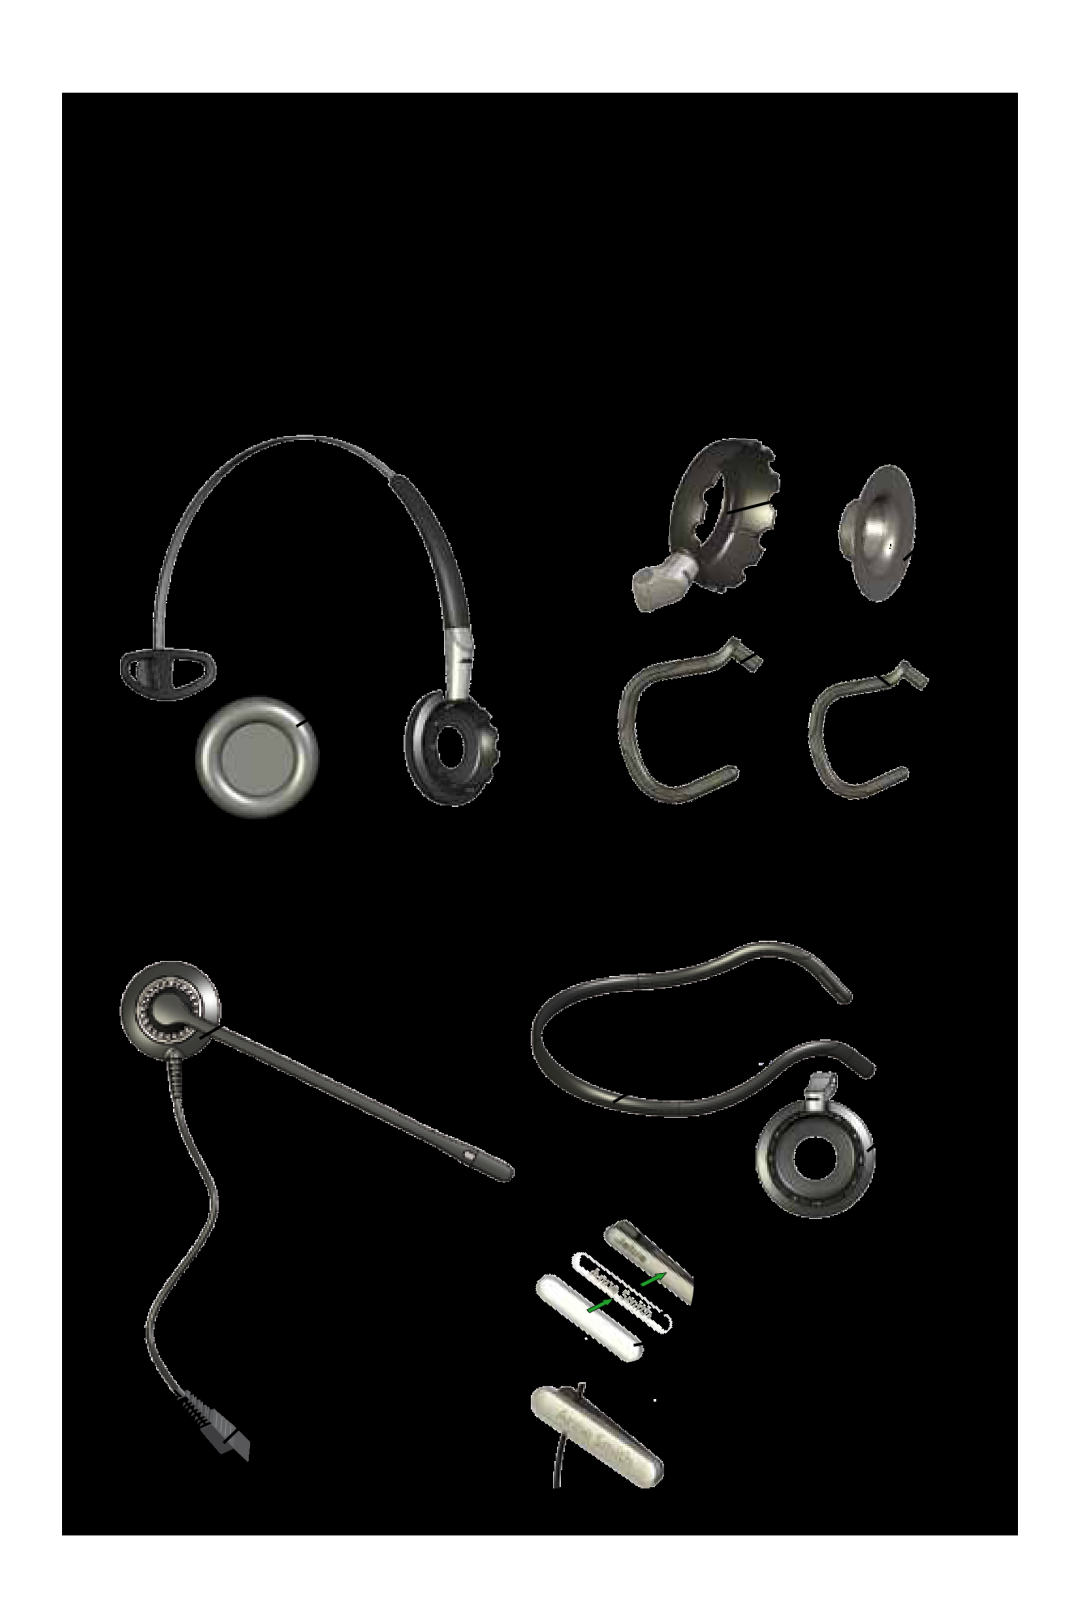 Jabra 2400 part overview, Headband Assembly, Ear hook Assembly, Ear hook ring, Ear gel, Ear cushion, Ear hooks, Headset 